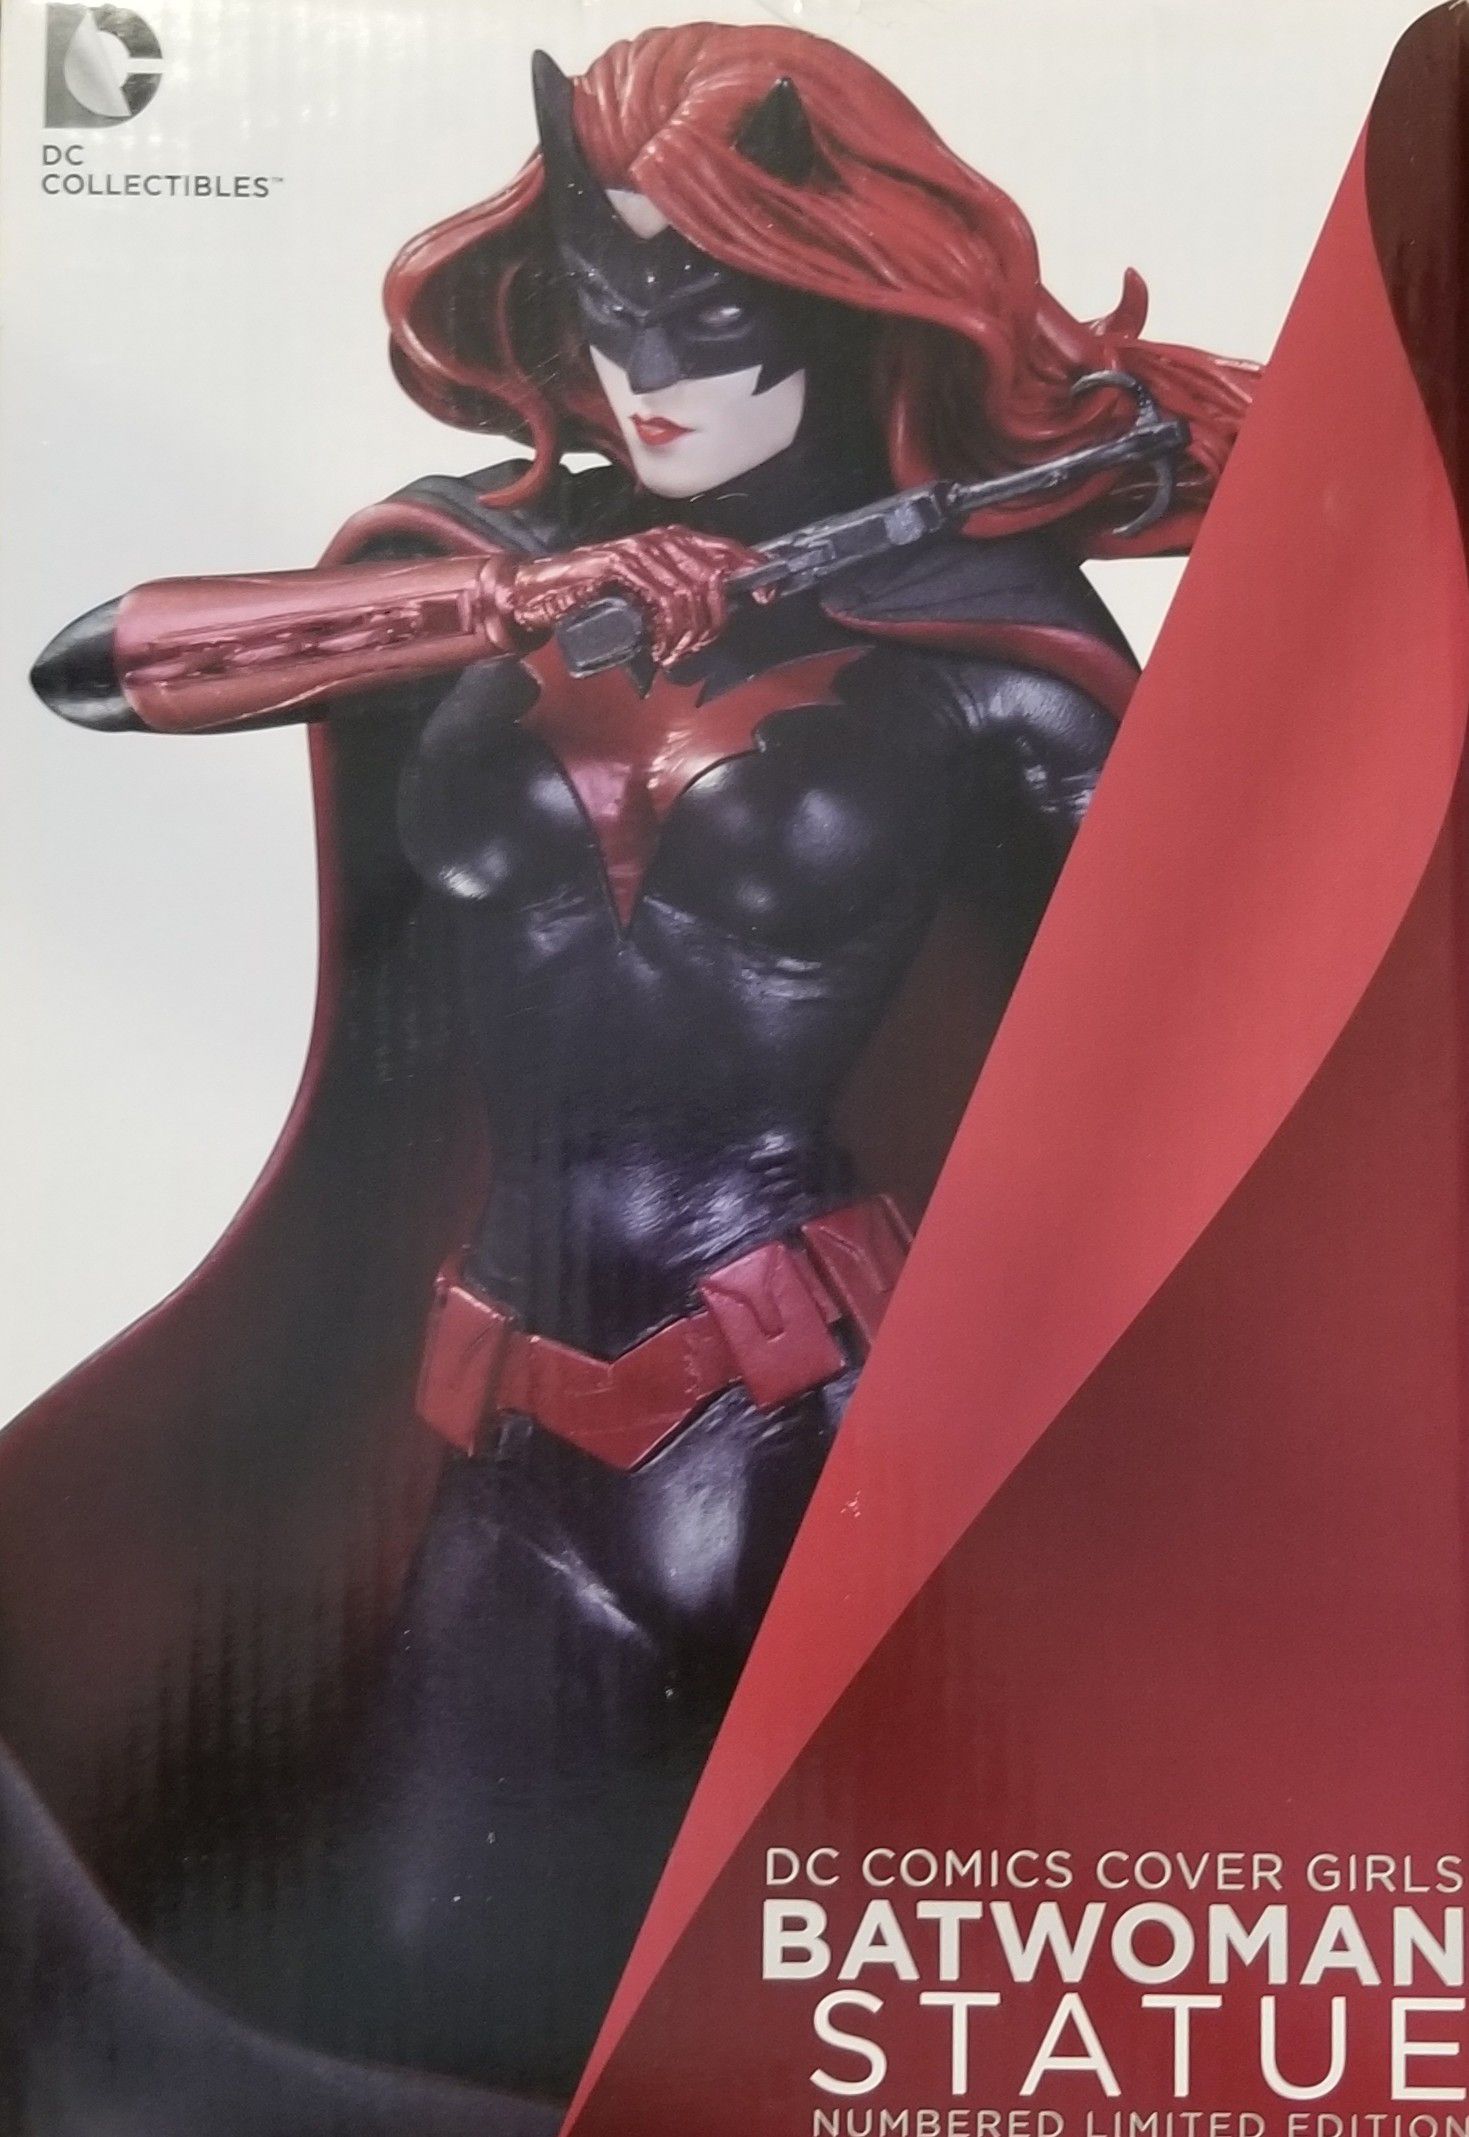 DC comics cover girls Batwoman statue